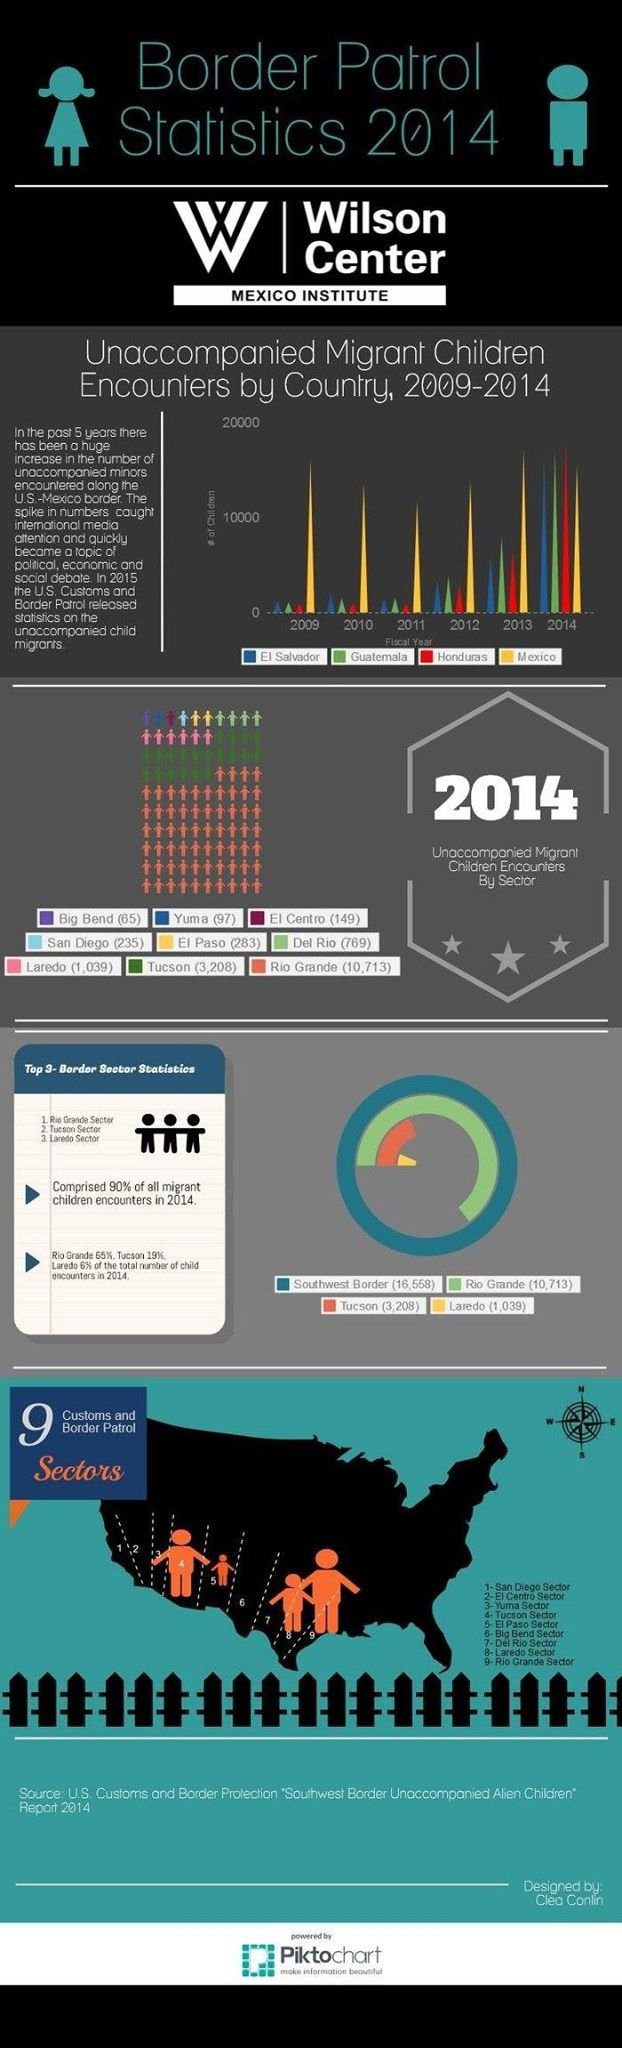 Border Patrol Statistics 2014